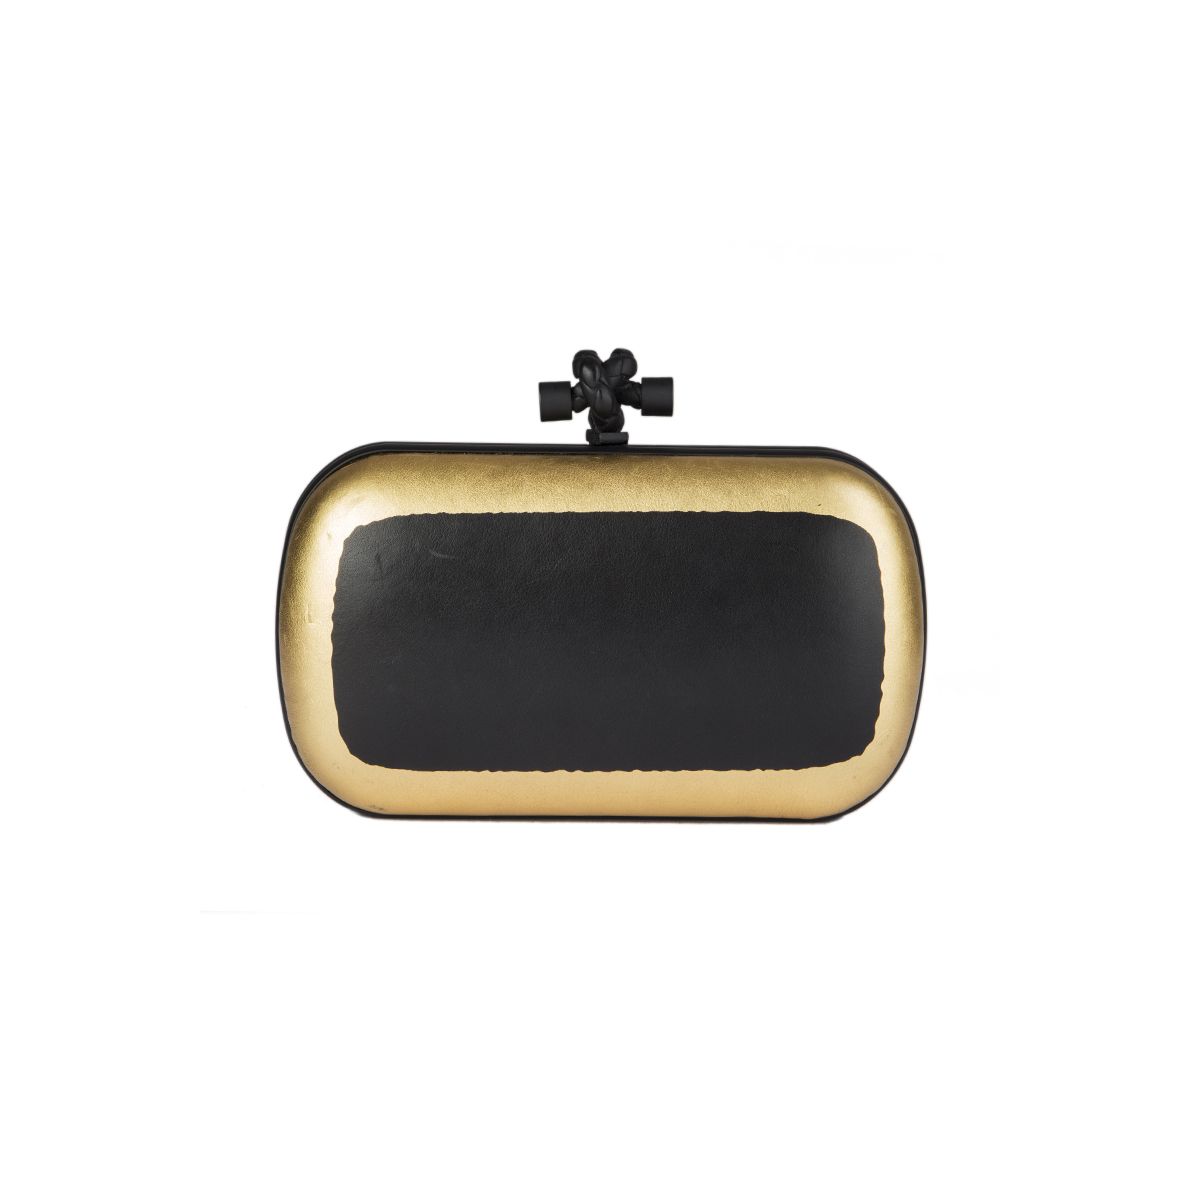 Bottega Veneta Intrecciato Leather Knot Clutch Gold with Black Stain